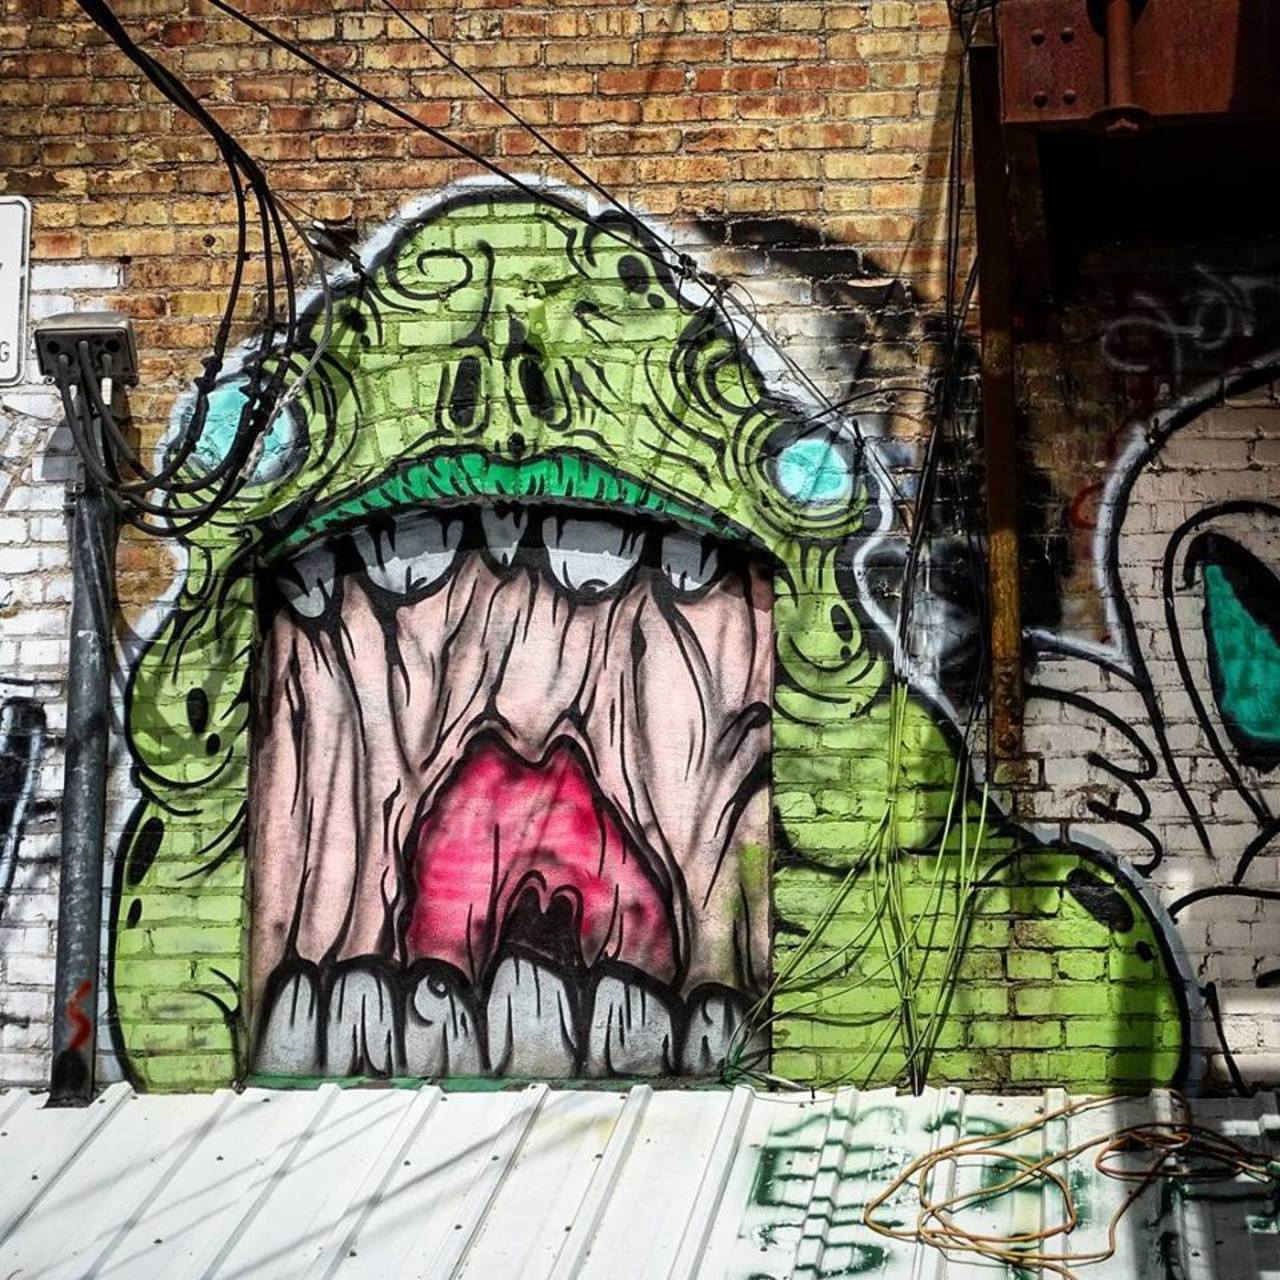 Art Alley, Rapid City https://northierthanthou.com/category/street-art/ #Streetart #mural #painting #graffiti https://t.co/j4myQQyhgB